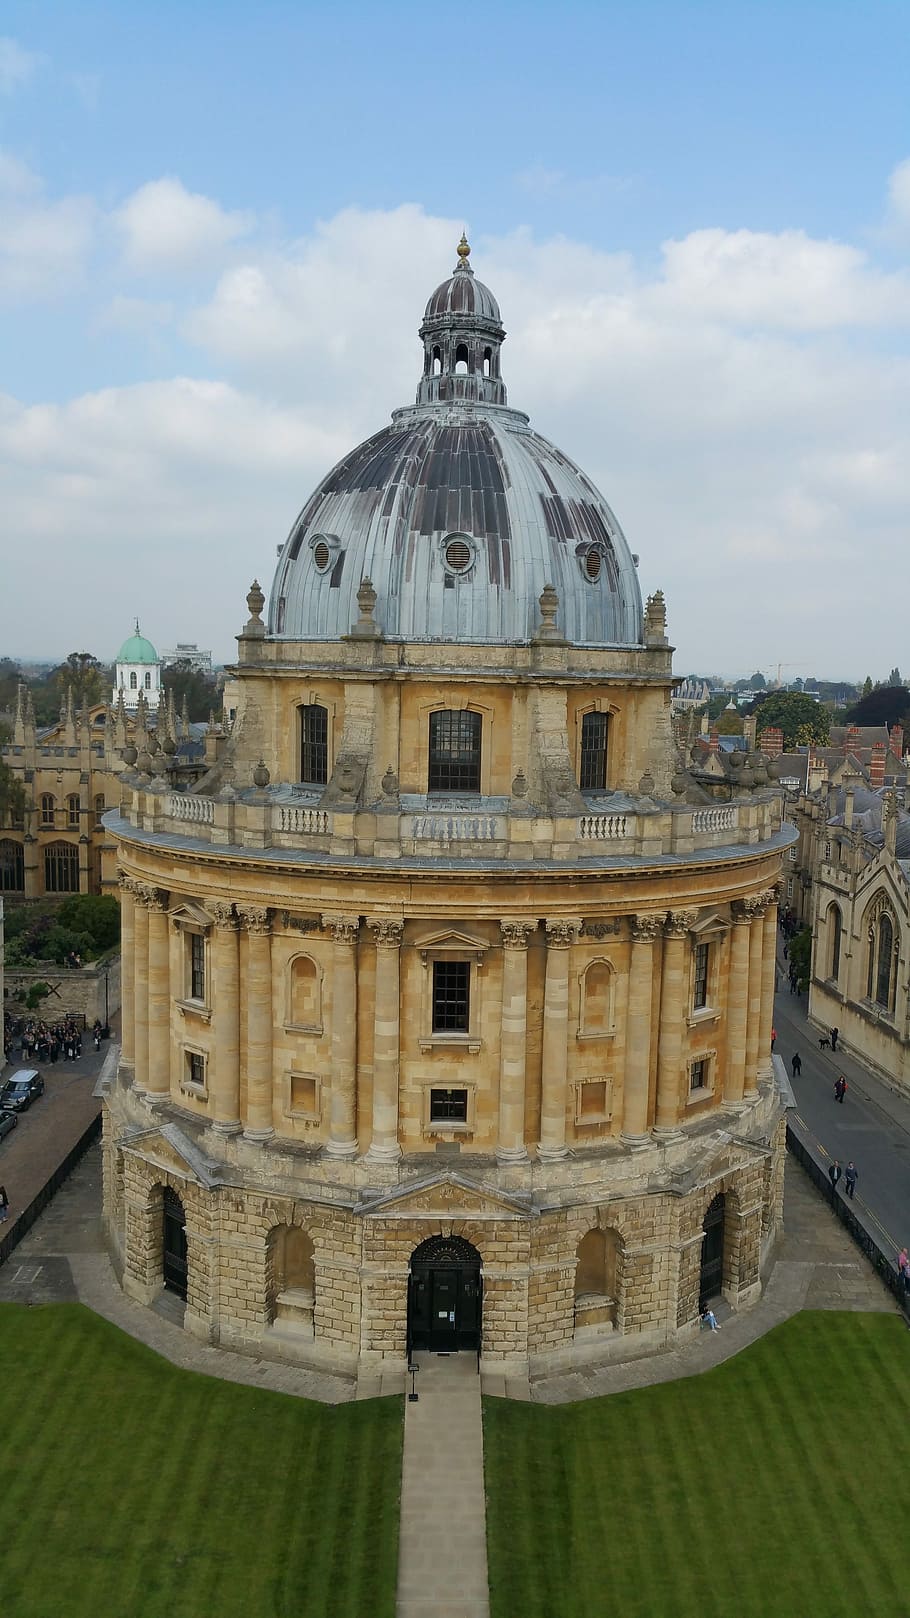 Oxford, Historic, City, England, radcliffe camera, dome, architecture, building exterior, cloud - sky, travel destinations